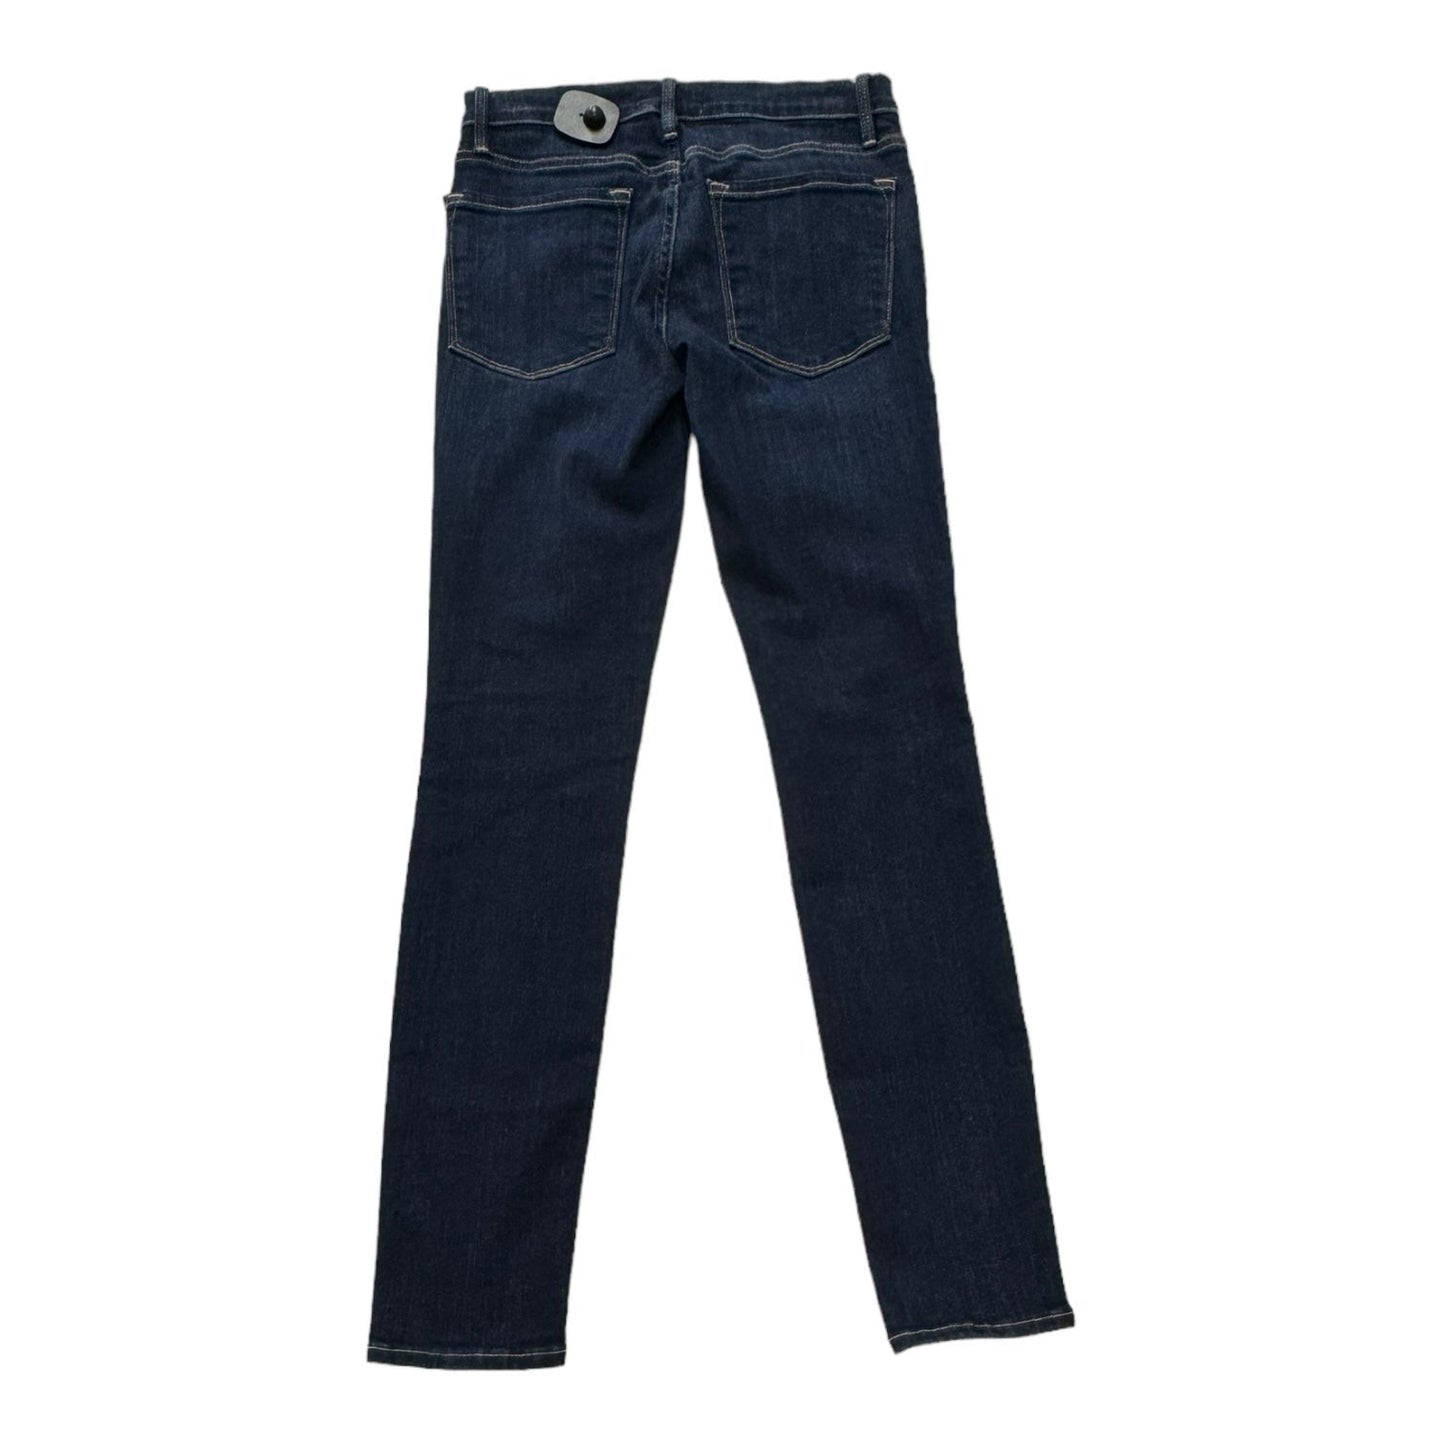 Jeans Skinny By Frame  Size: 4